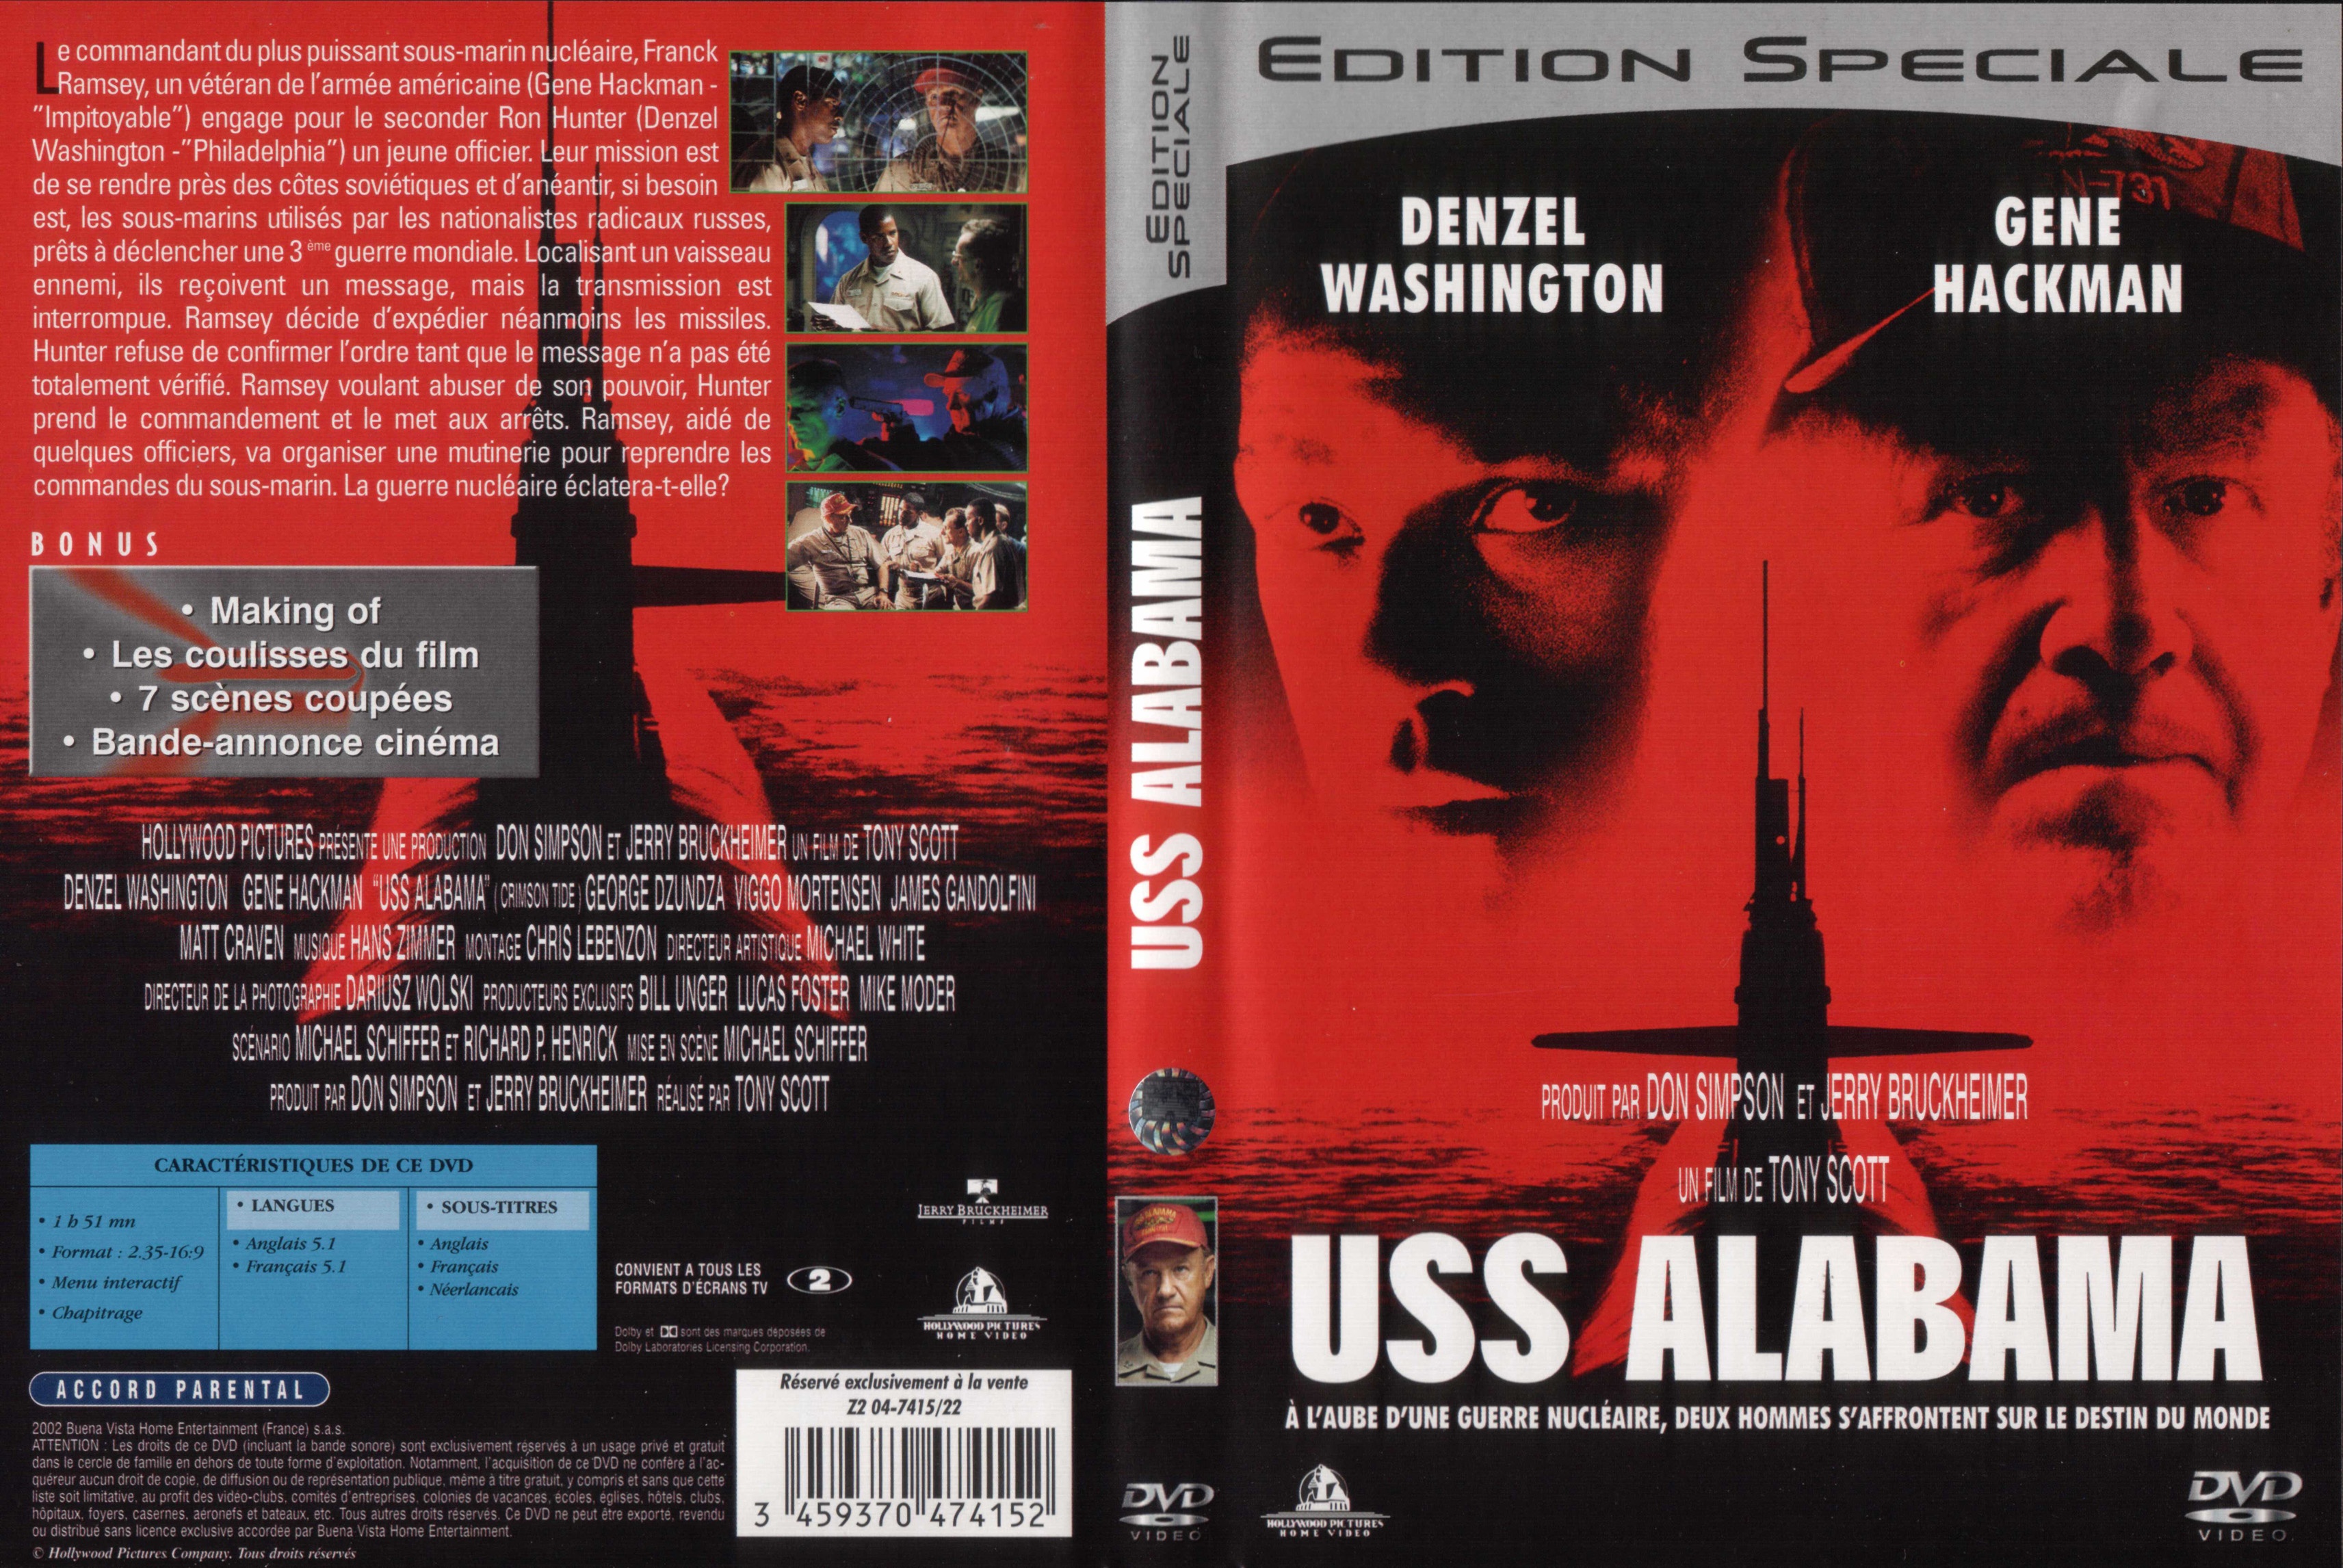 Jaquette DVD USS Alabama v3